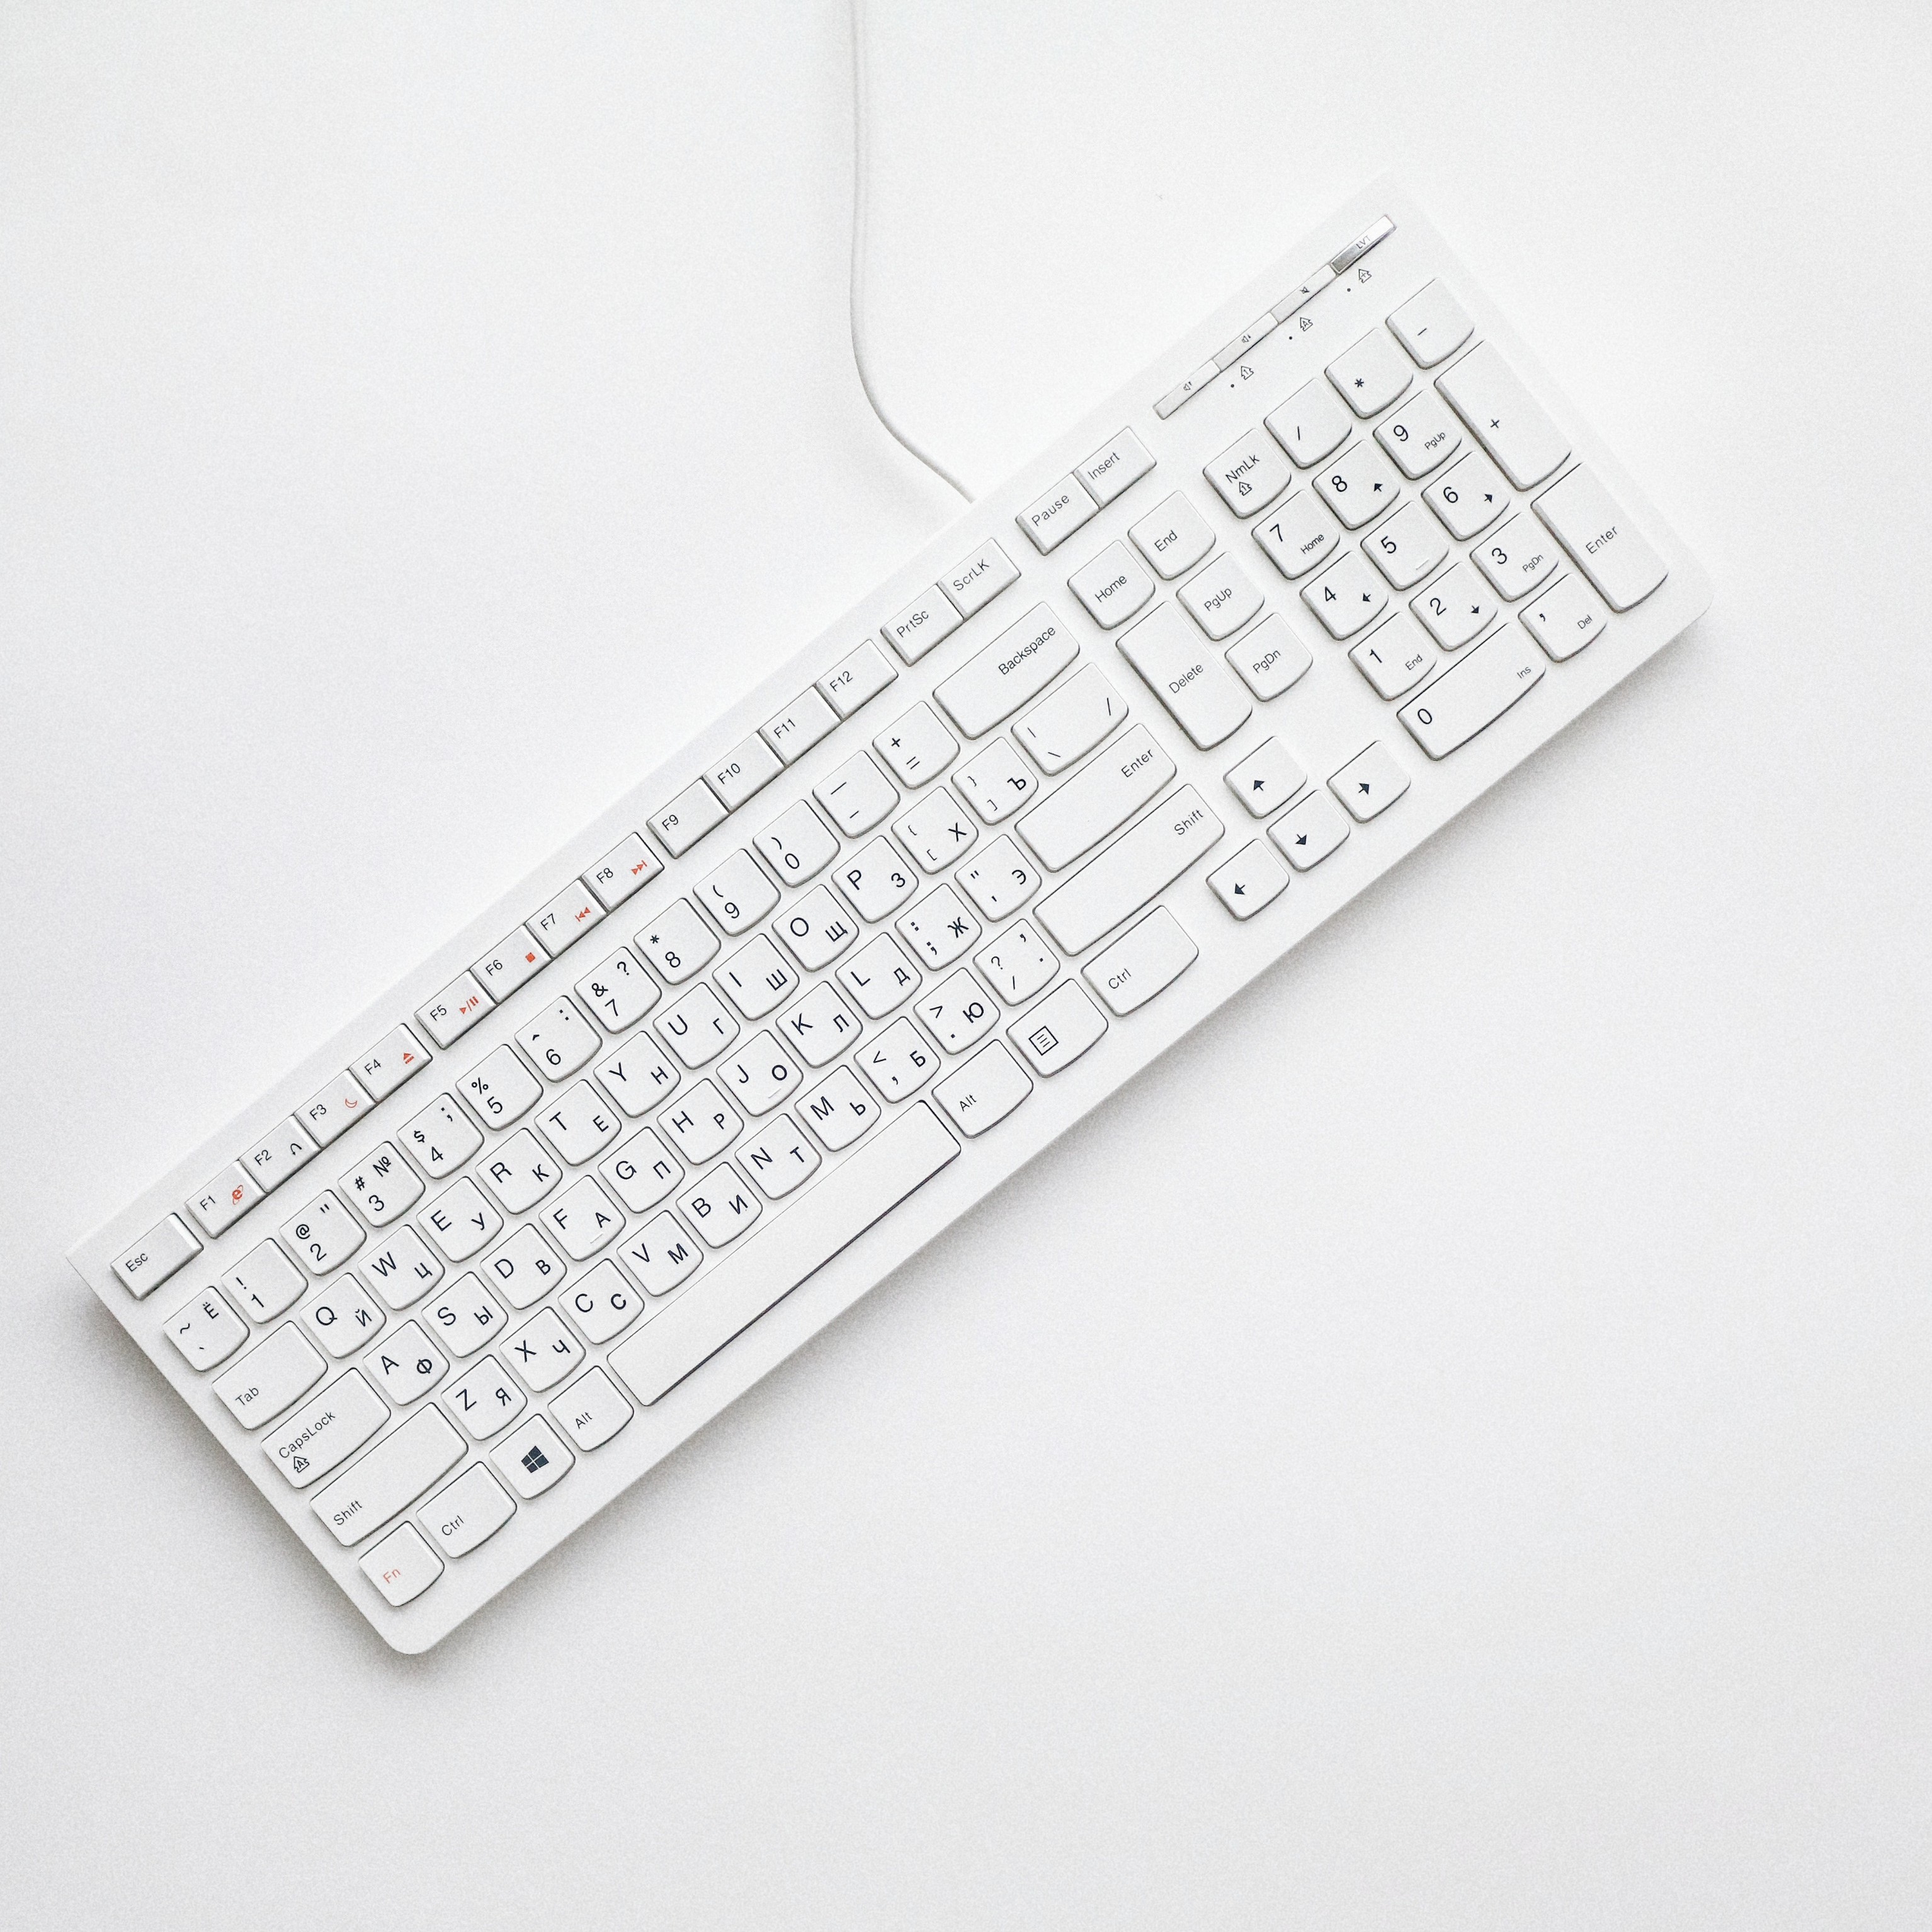 A white keyboard